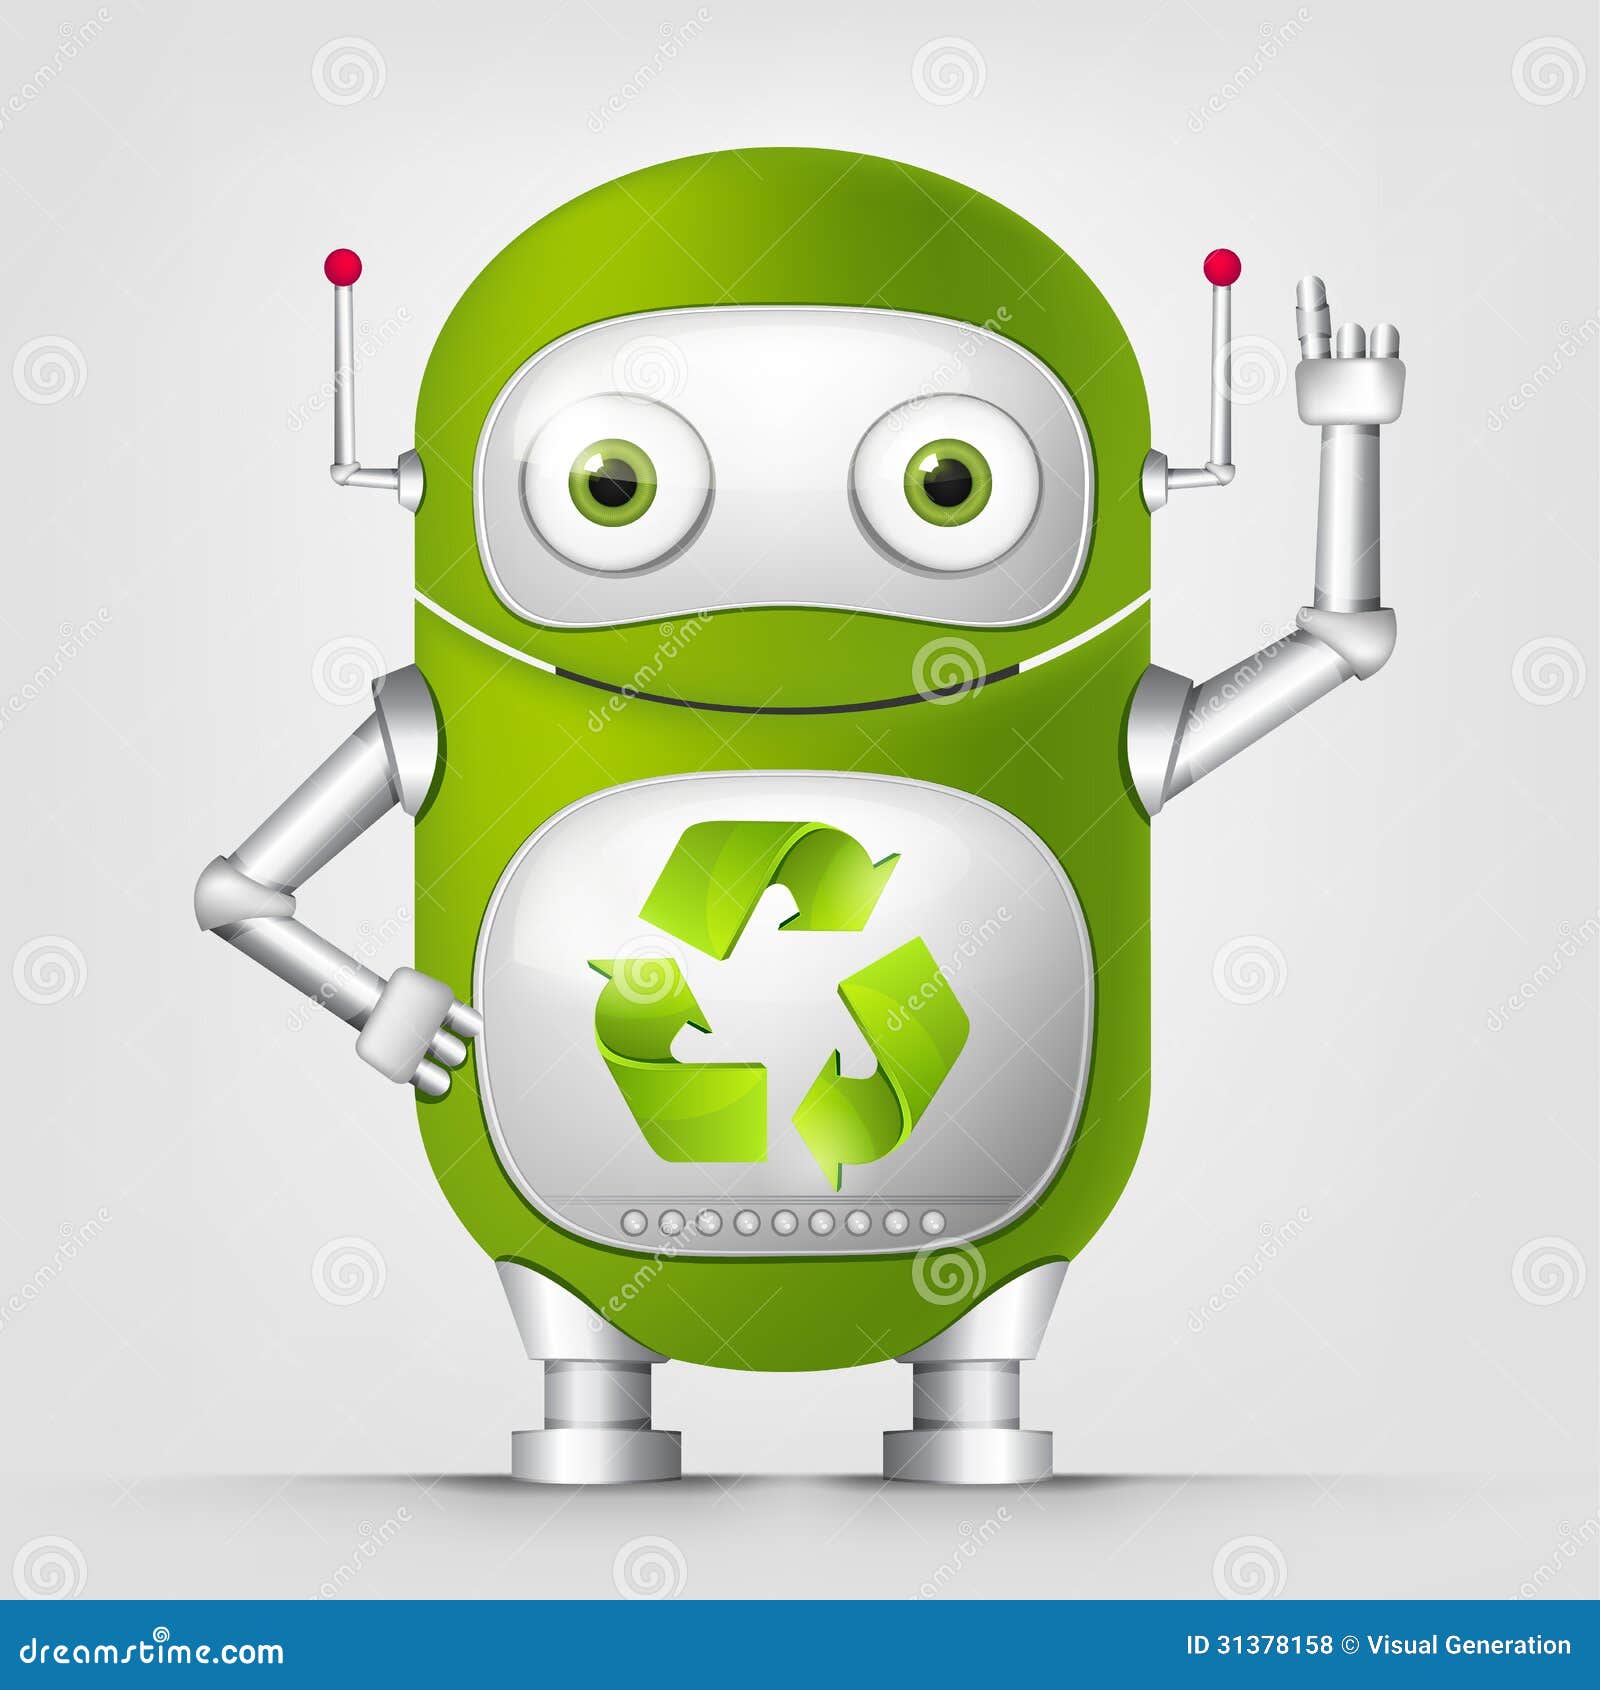 Green Robot stock vector. Illustration of cartoon, character - 31378158